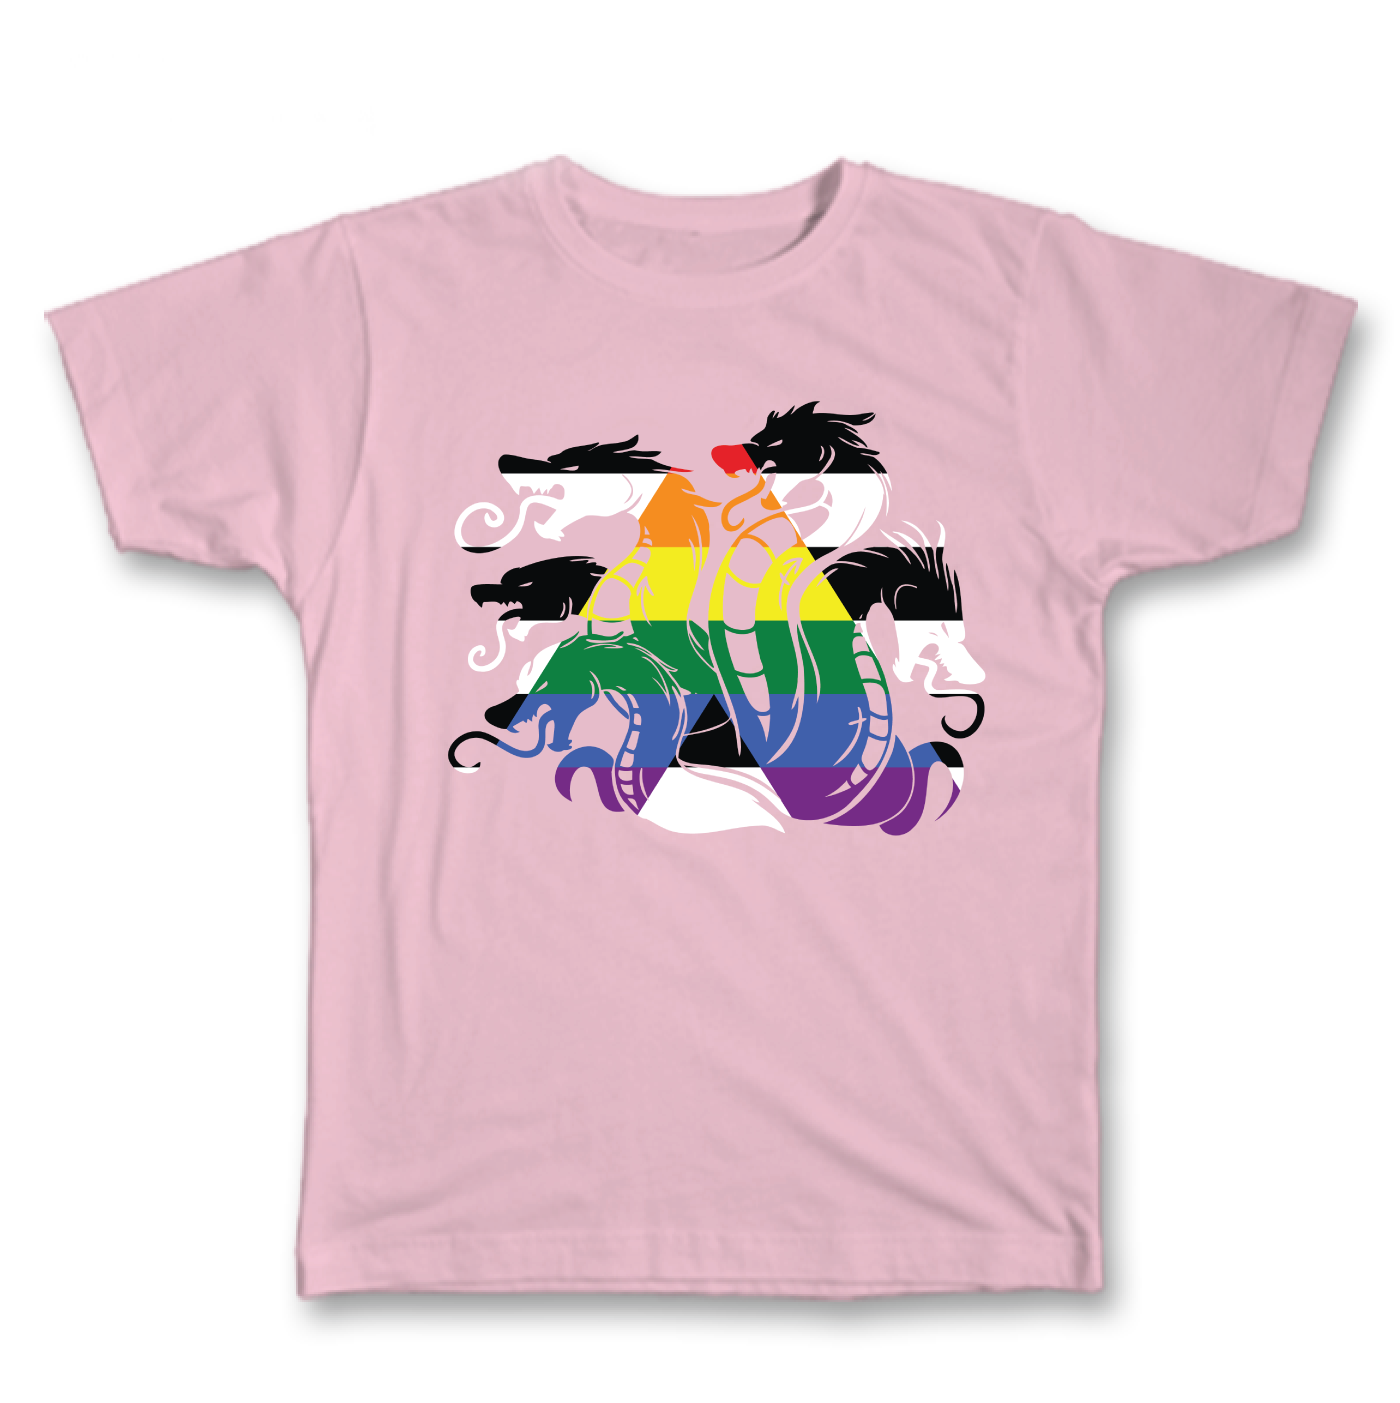 Ally Pride-dra Shirt